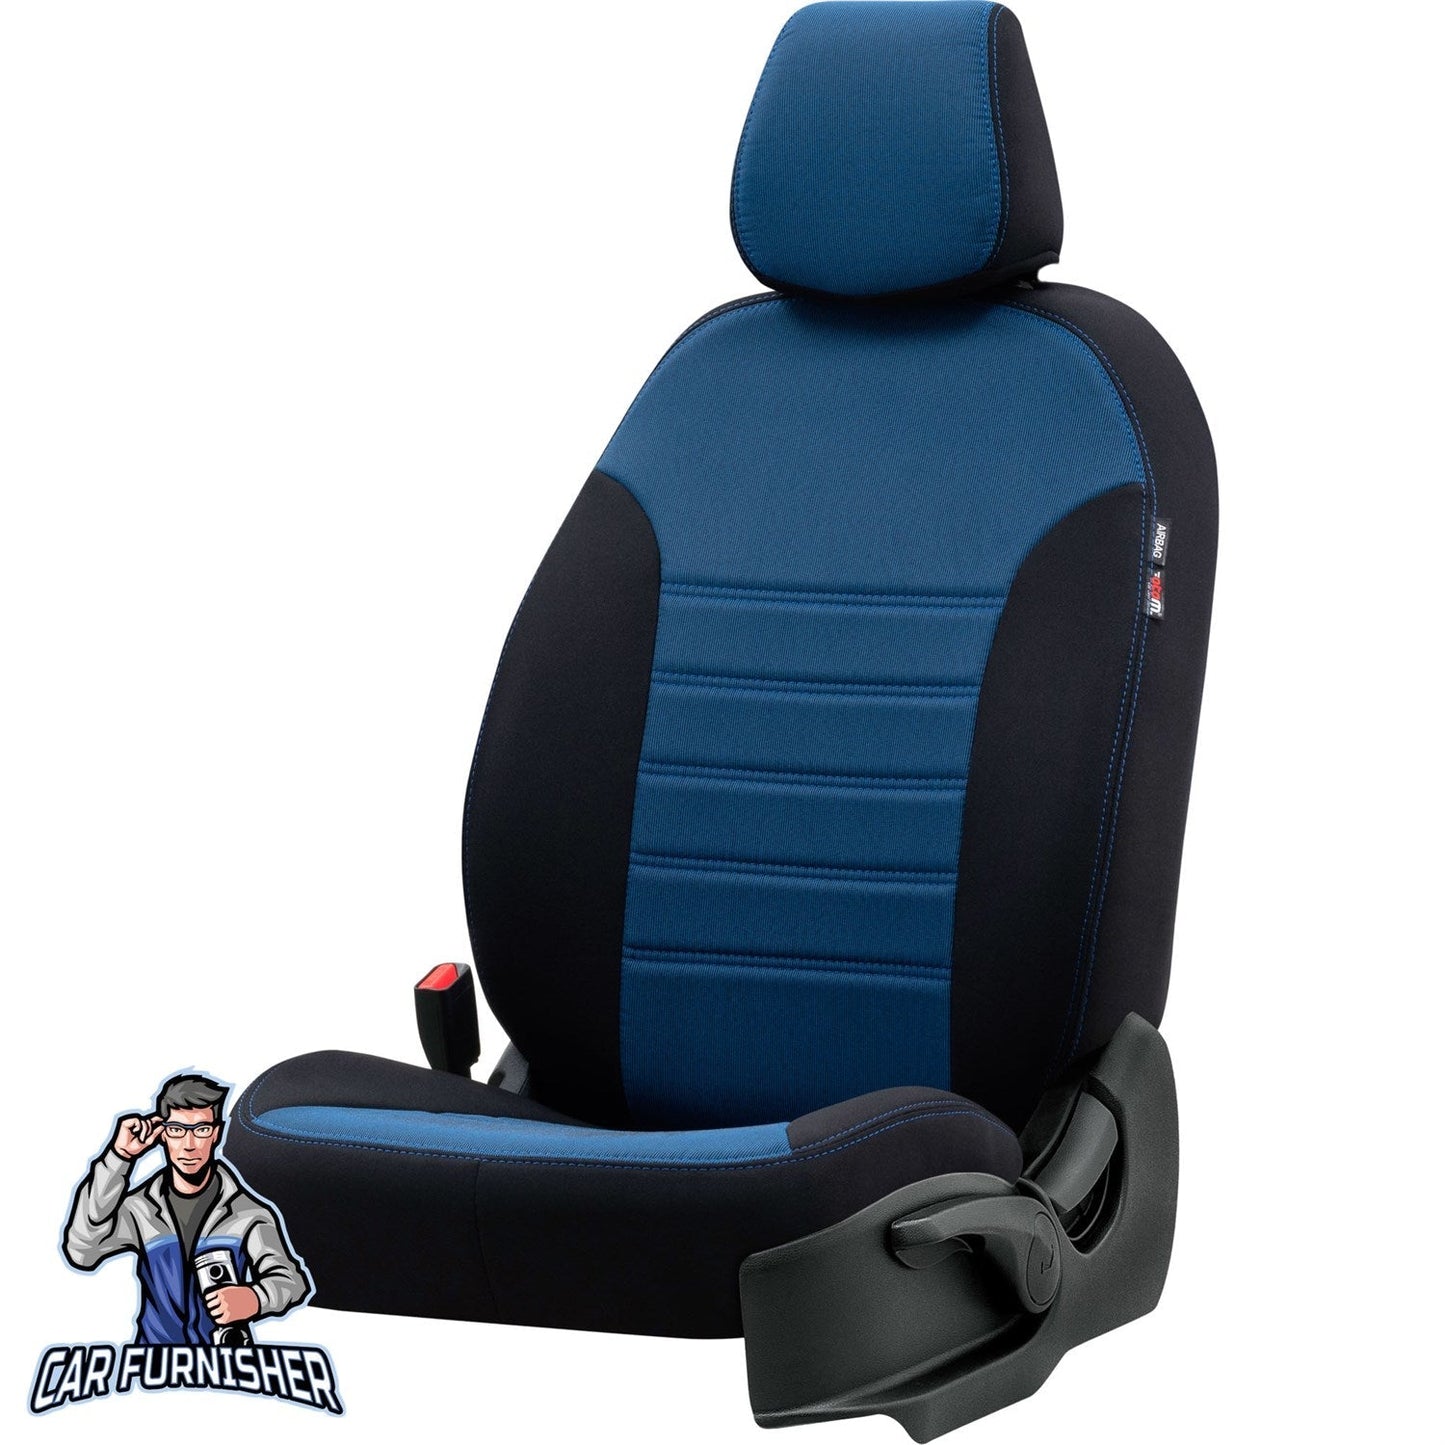 Fiat Tipo Seat Covers Original Jacquard Design Blue Jacquard Fabric